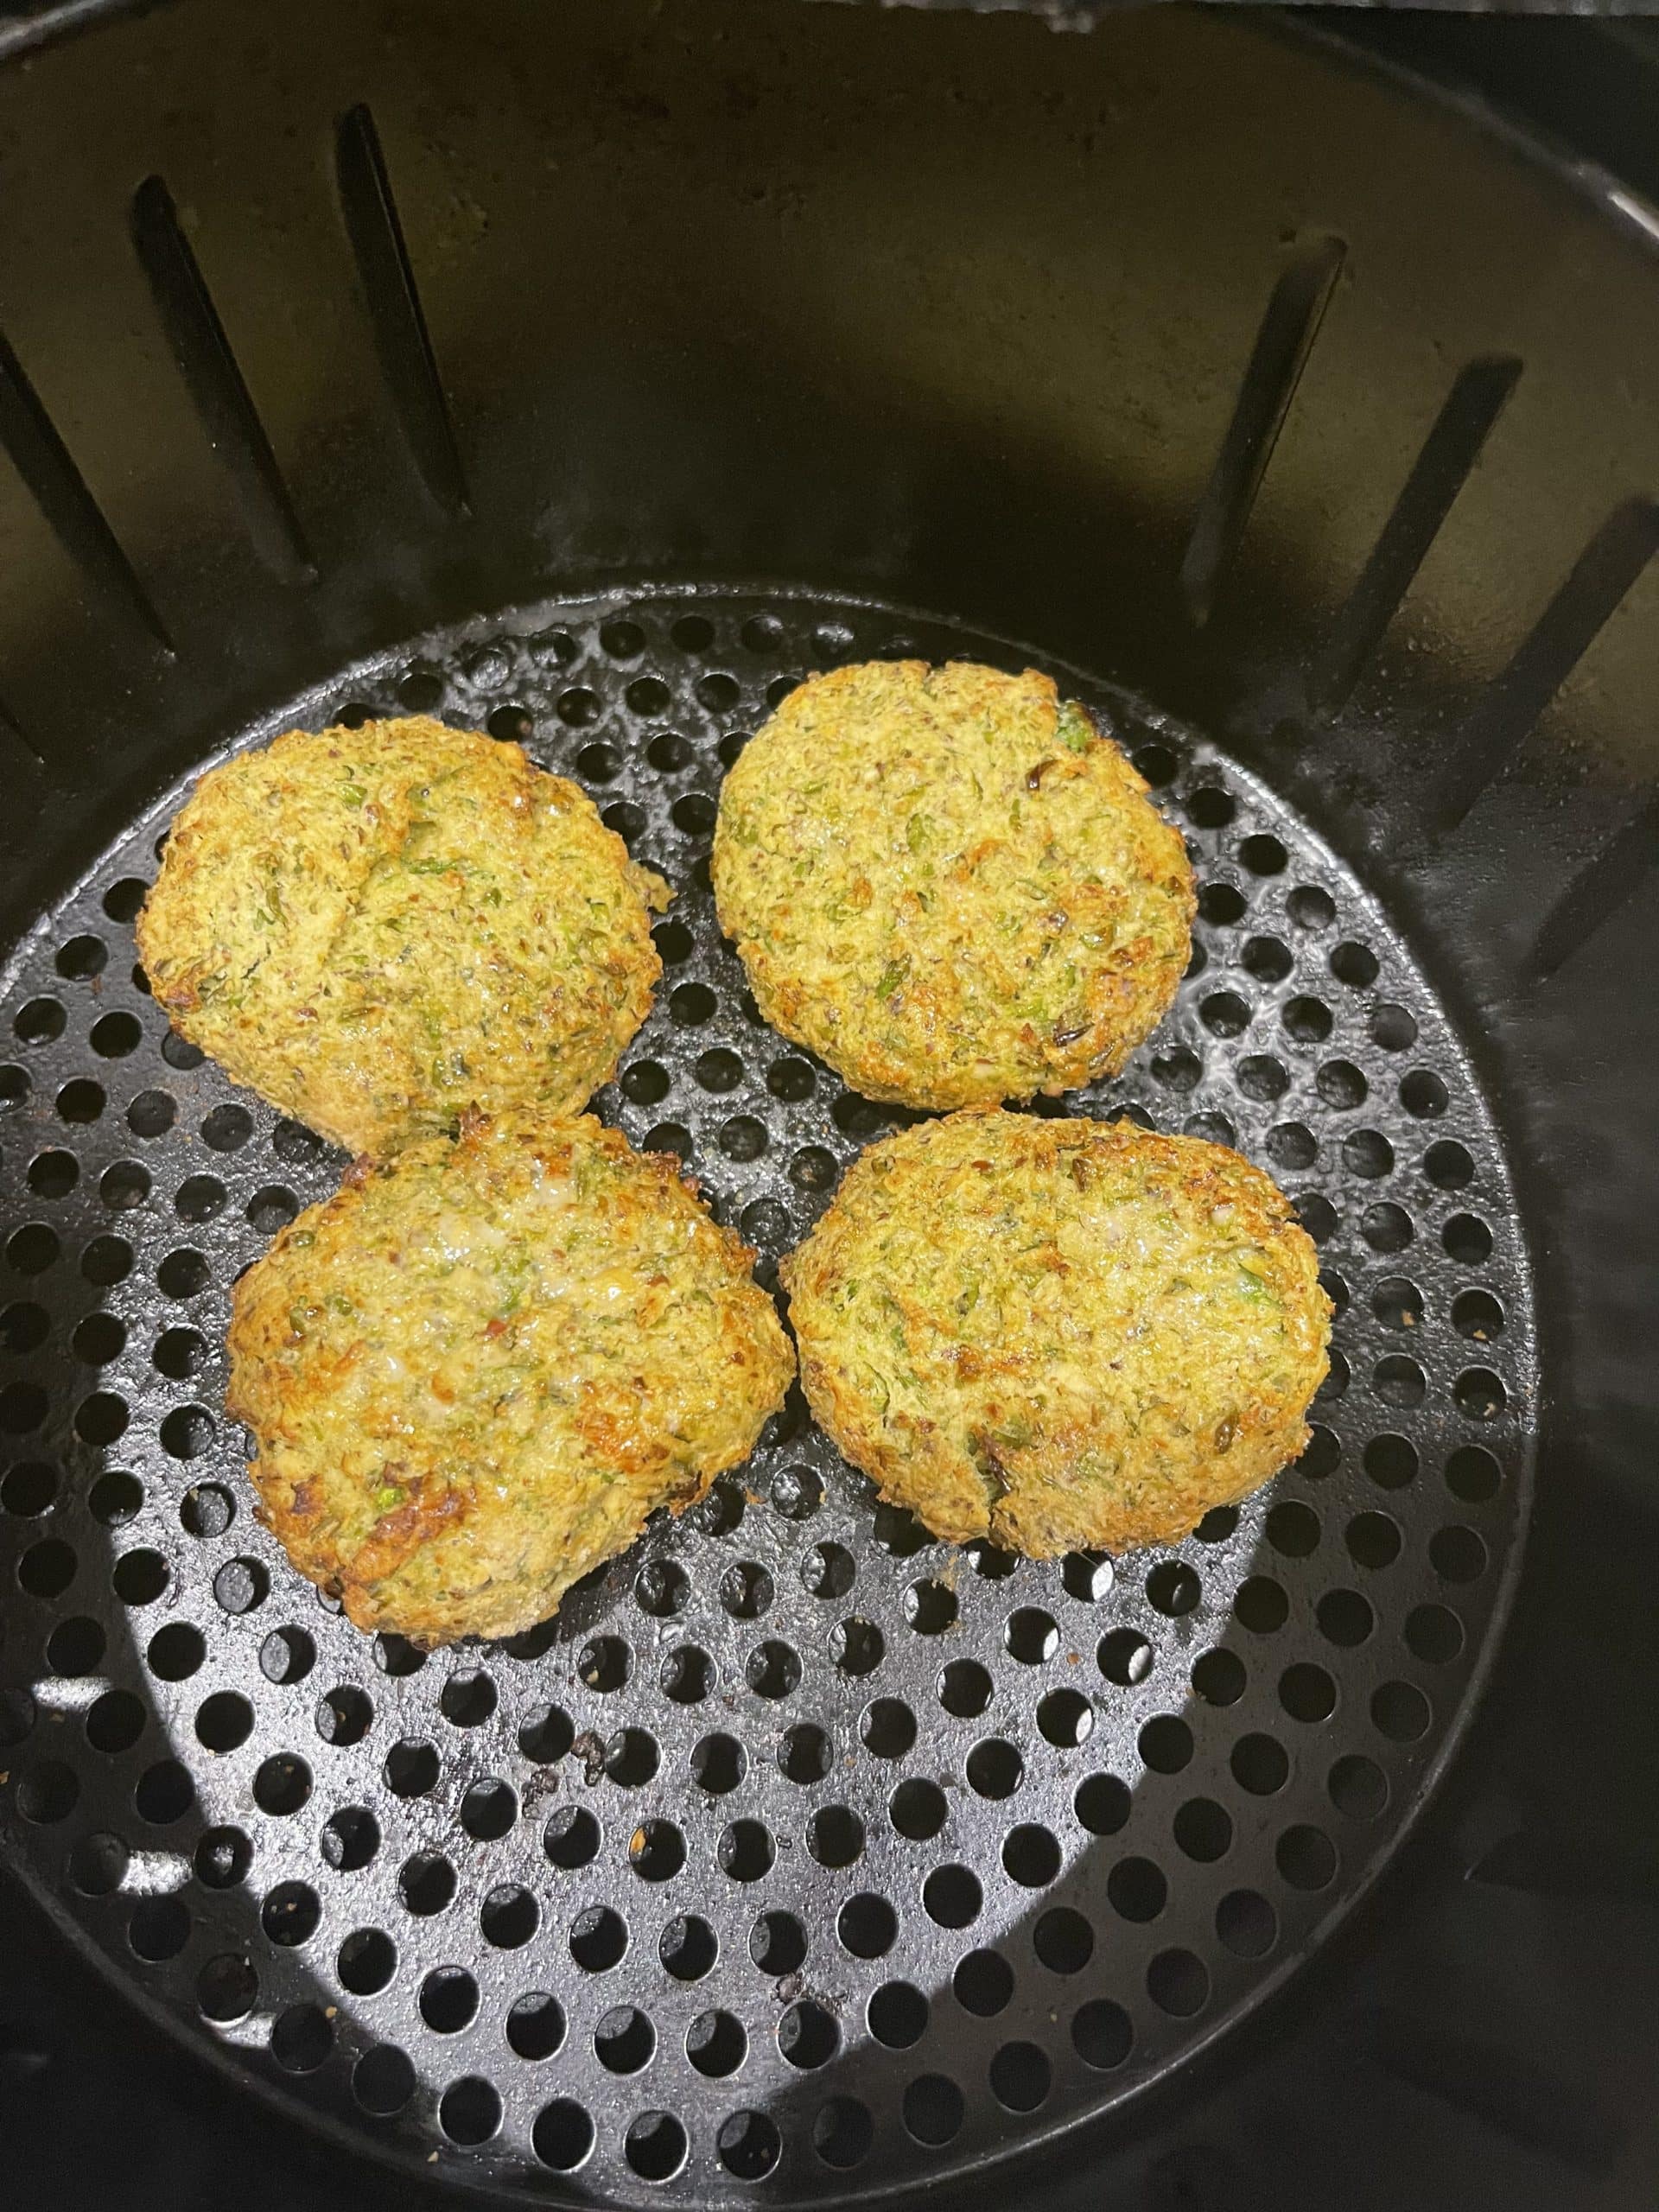 Falafel in Air Fryer